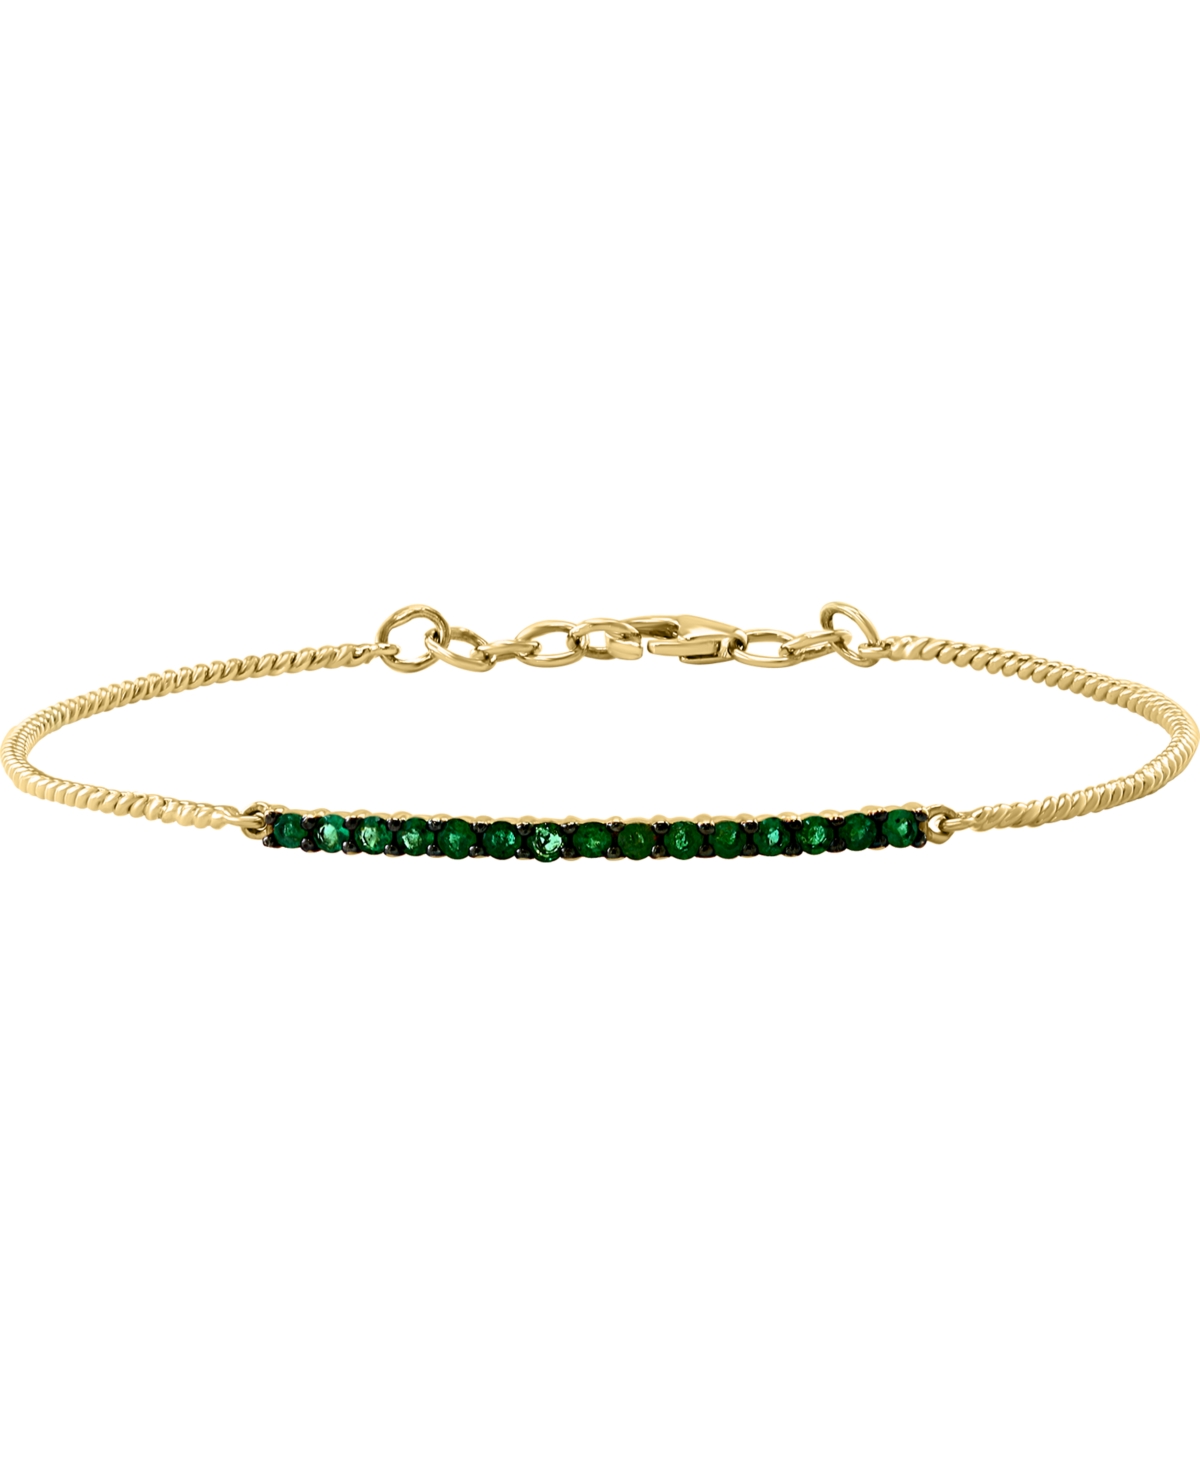 Sapphire (5/8 ct. t.w.) Tennis Bracelet in 14k White Gold (Also in Ruby & Emerald) - Sapphire